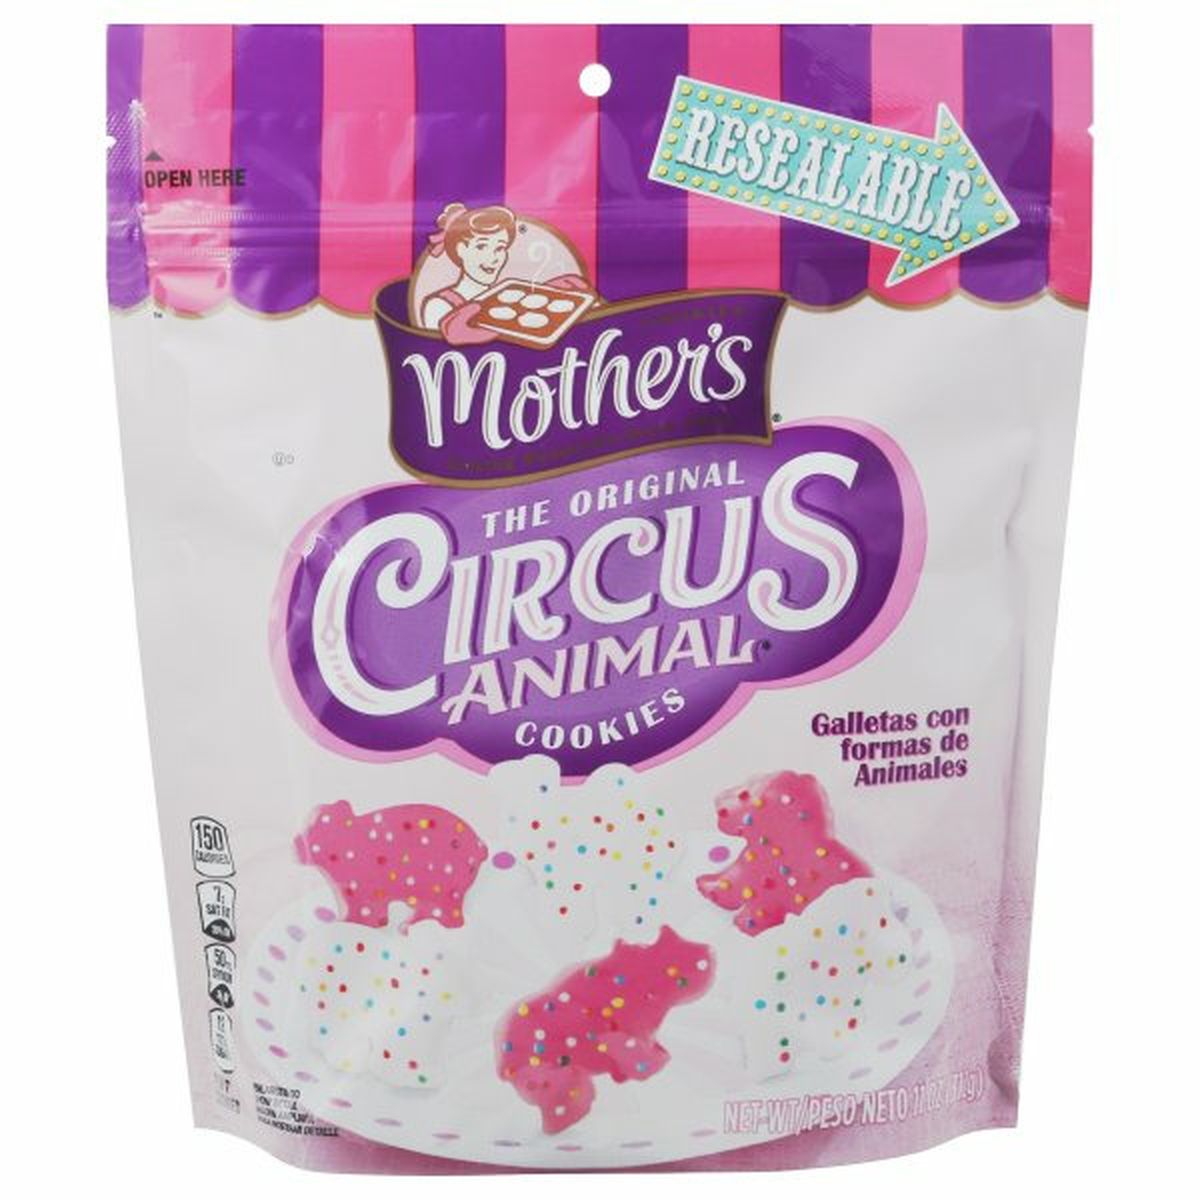 Calories in Mother's Cookies, The Original, Circus Animal